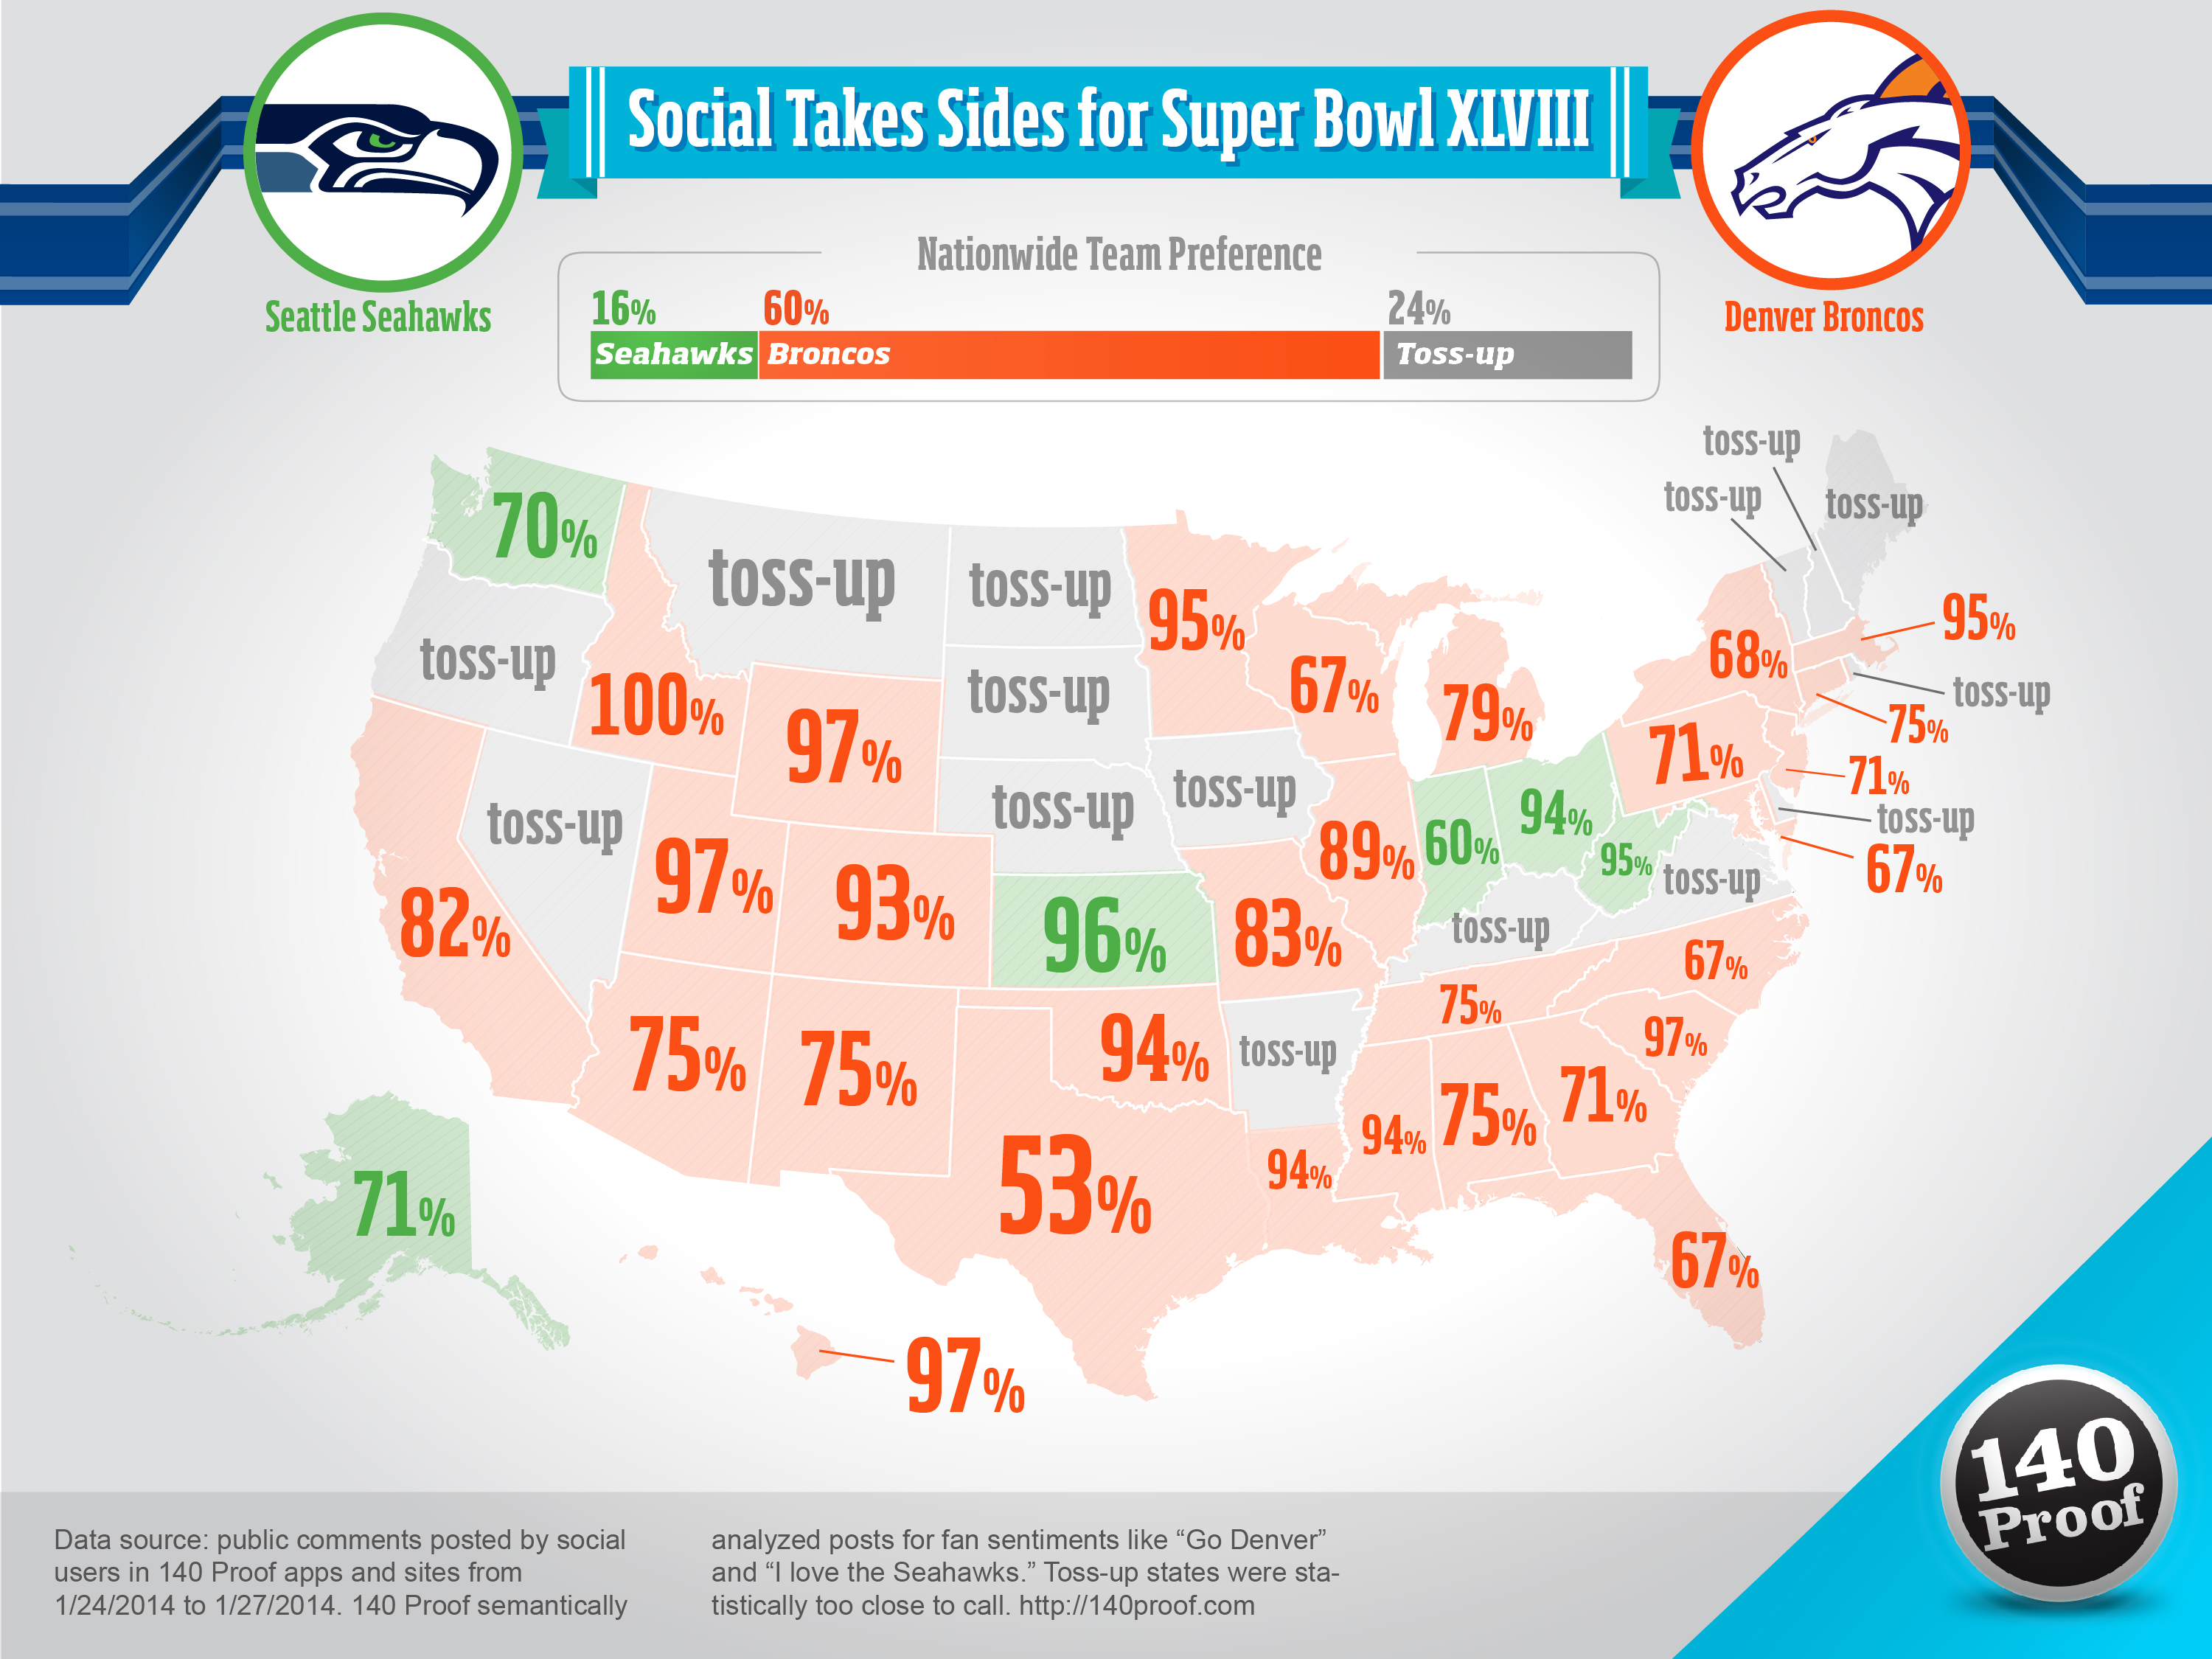 Super Bowl Fans on Social [140 Proof]